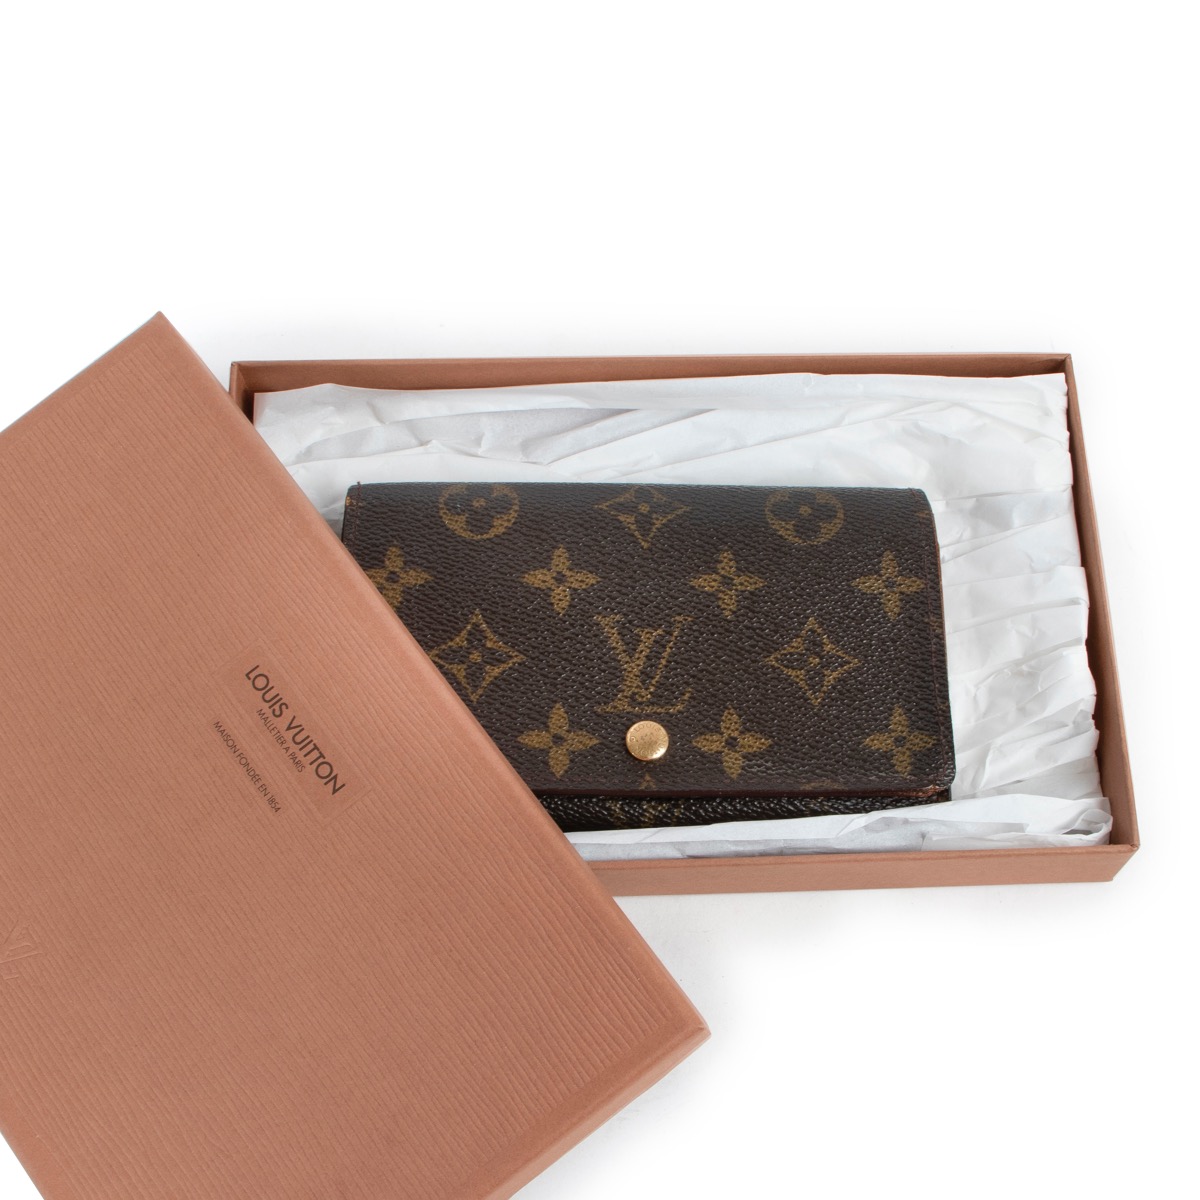 Louis Vuitton LOUIS VUITTON Monogram LV Escal Portefeuille Victorine  Trifold Wallet M68842 | eLADY Globazone